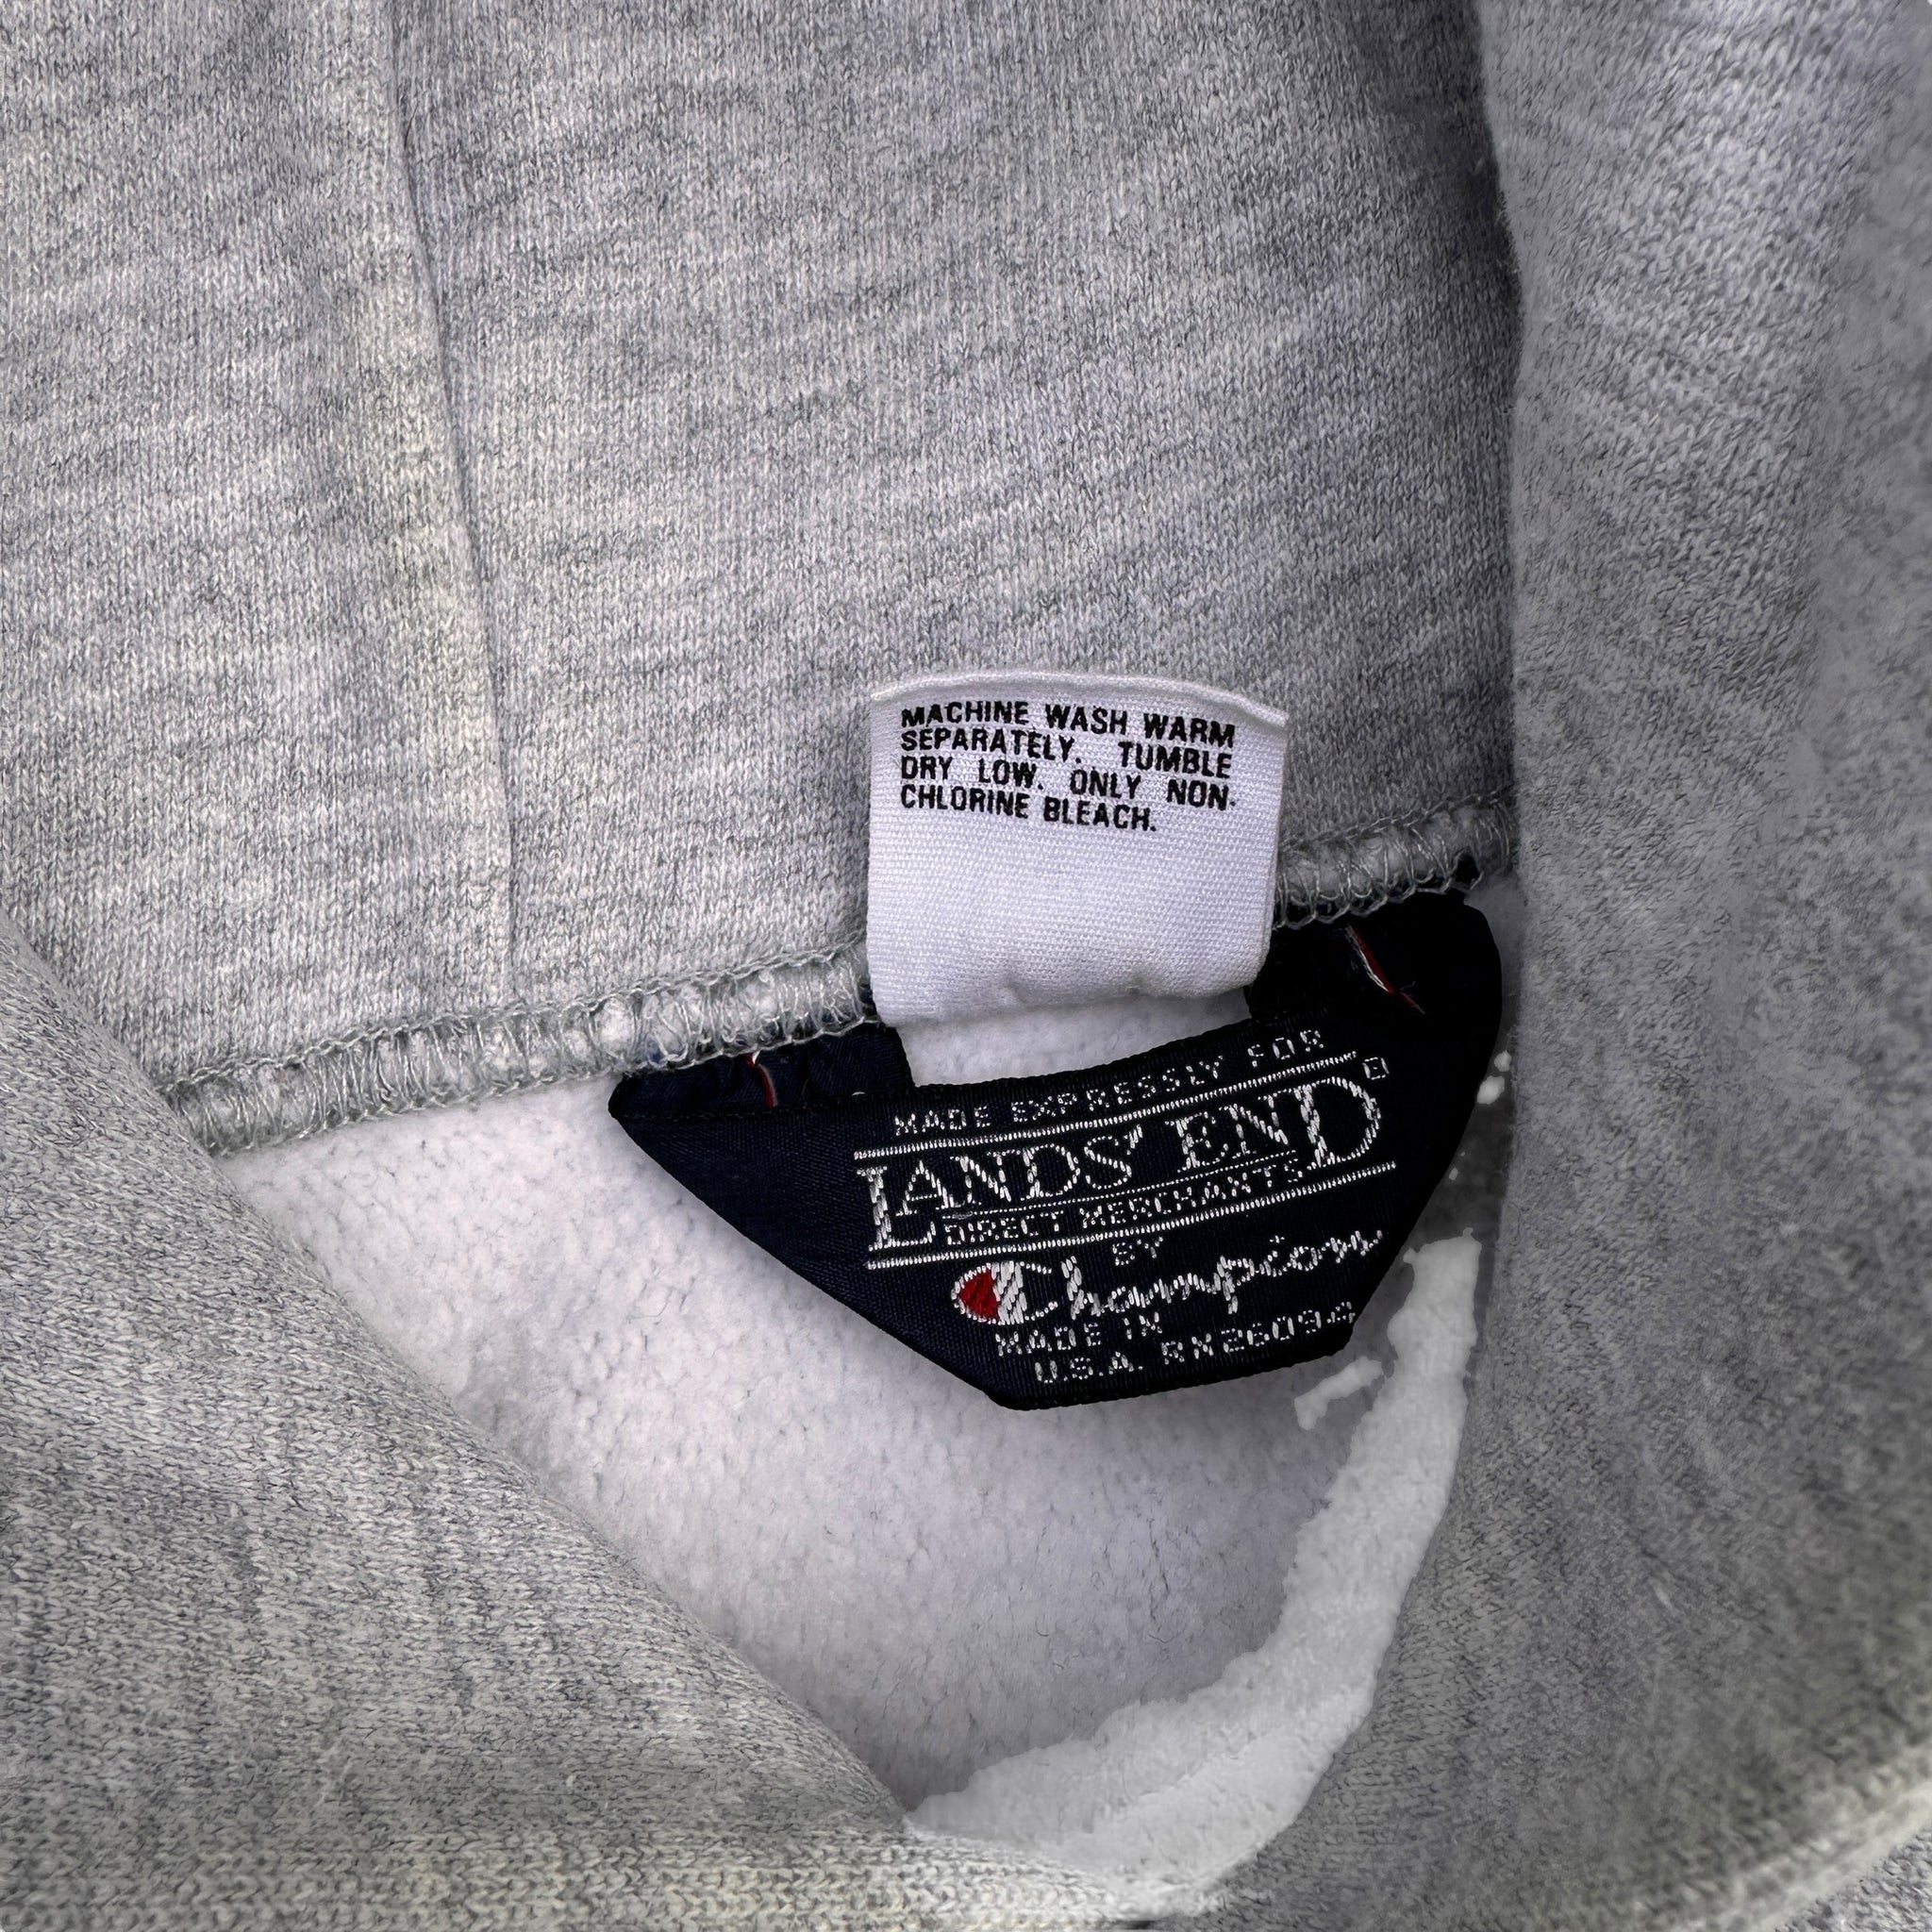 80s Champion reverse weave landsend hoodie XL